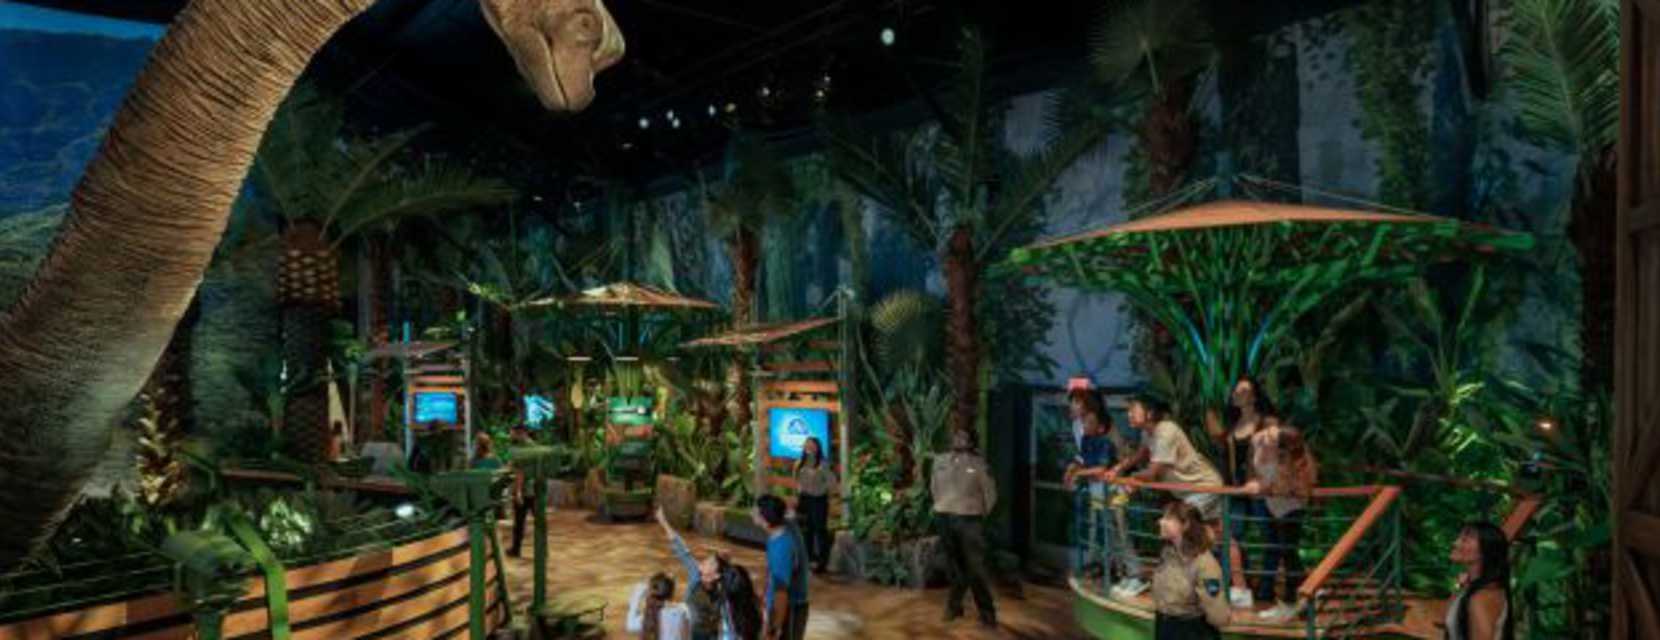 Jurassic World: The Exhibition in Denver, Colorado